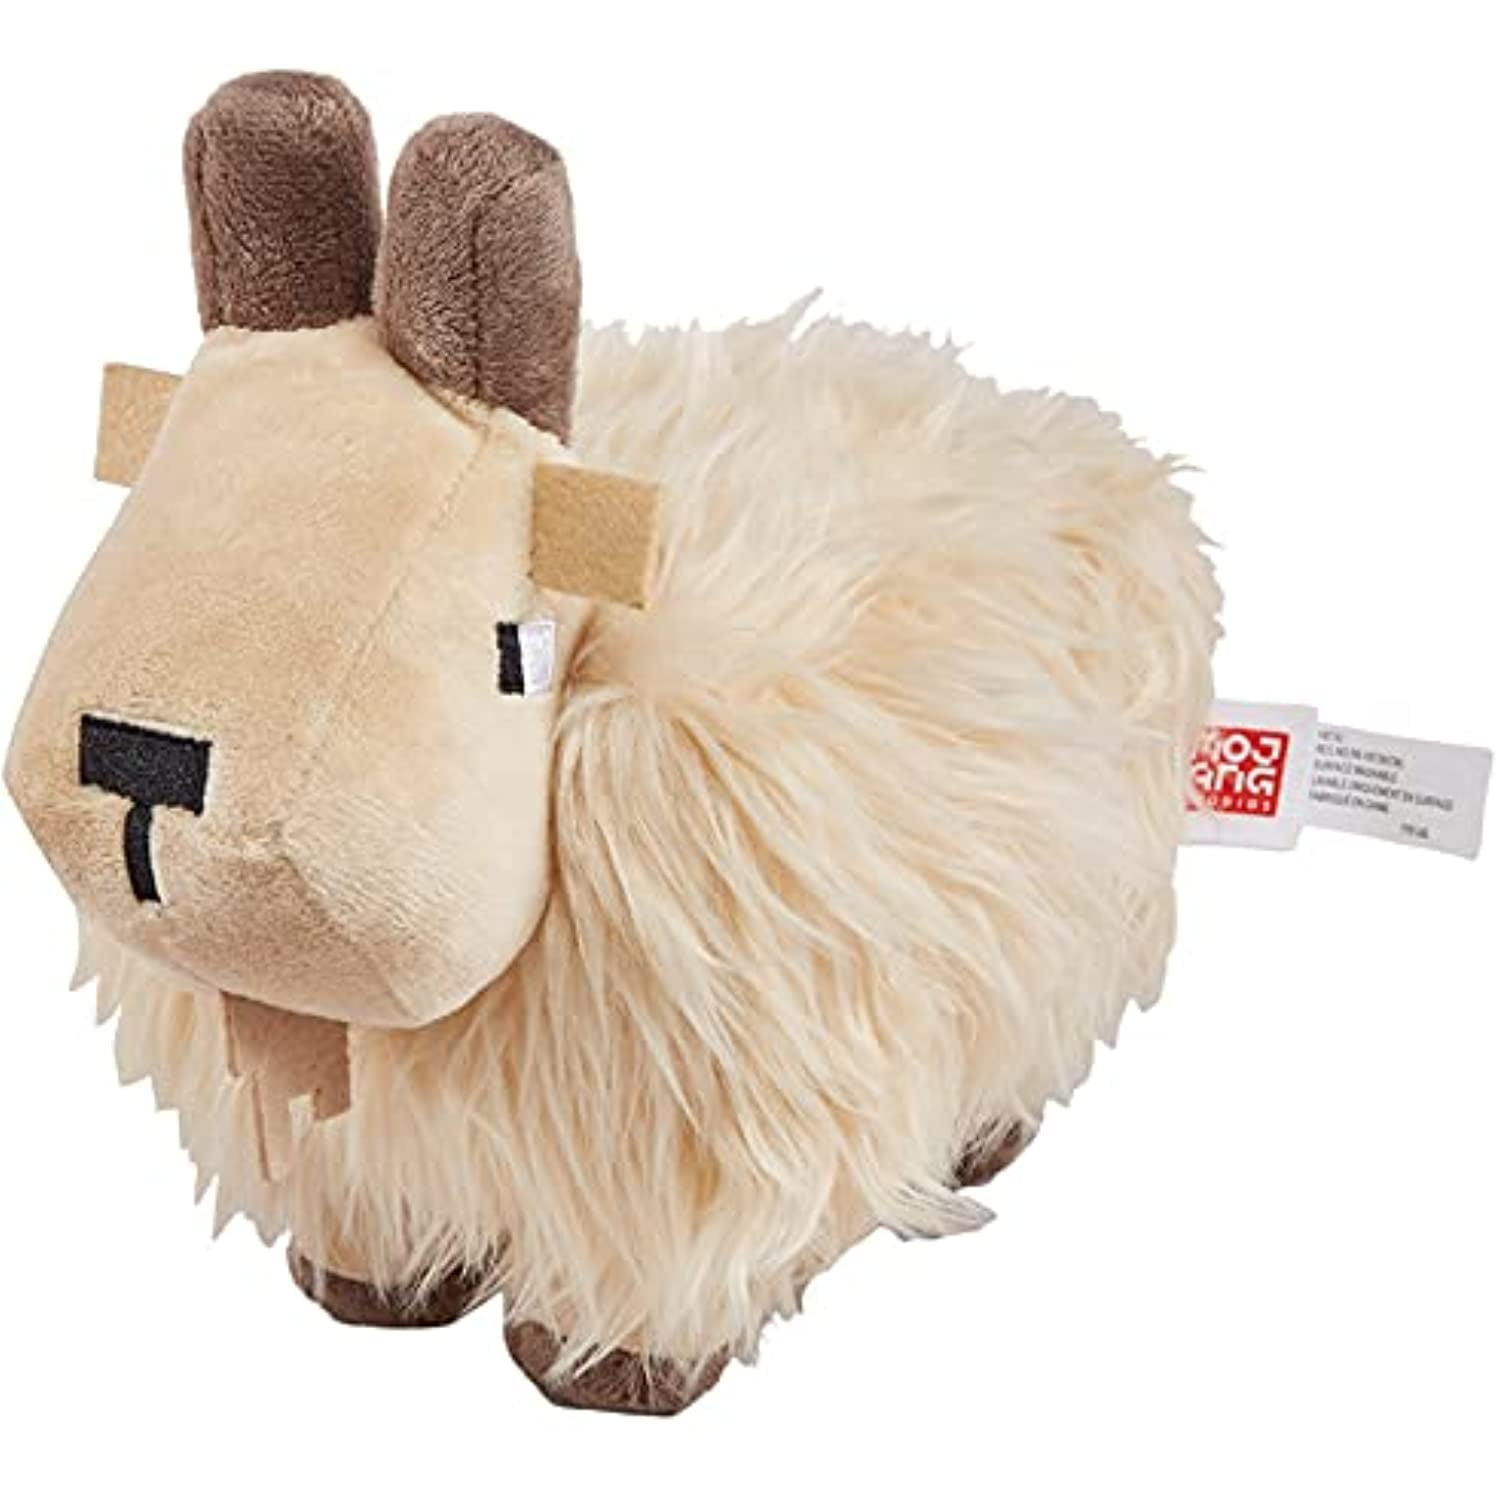 Minecraft White Sheep Plush Toy Gift 